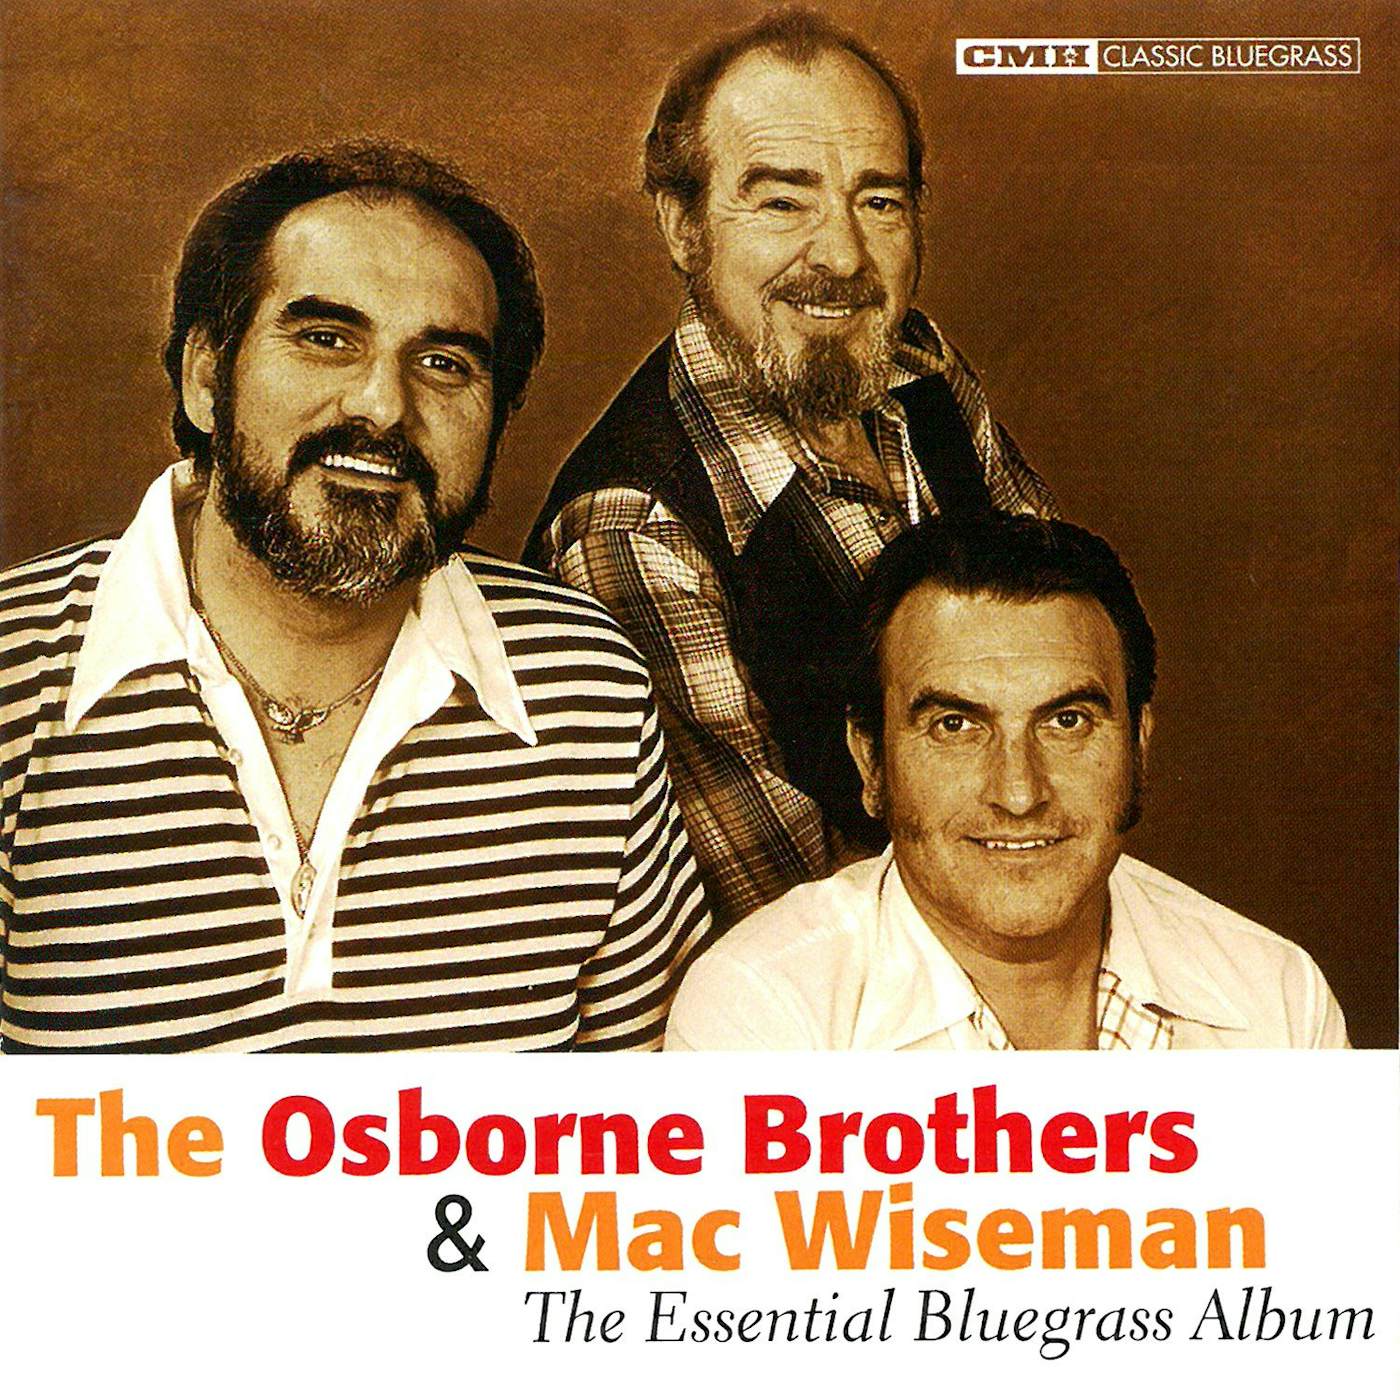 The Osborne Brothers & Mac Wiseman: The Essential Bluegrass Album